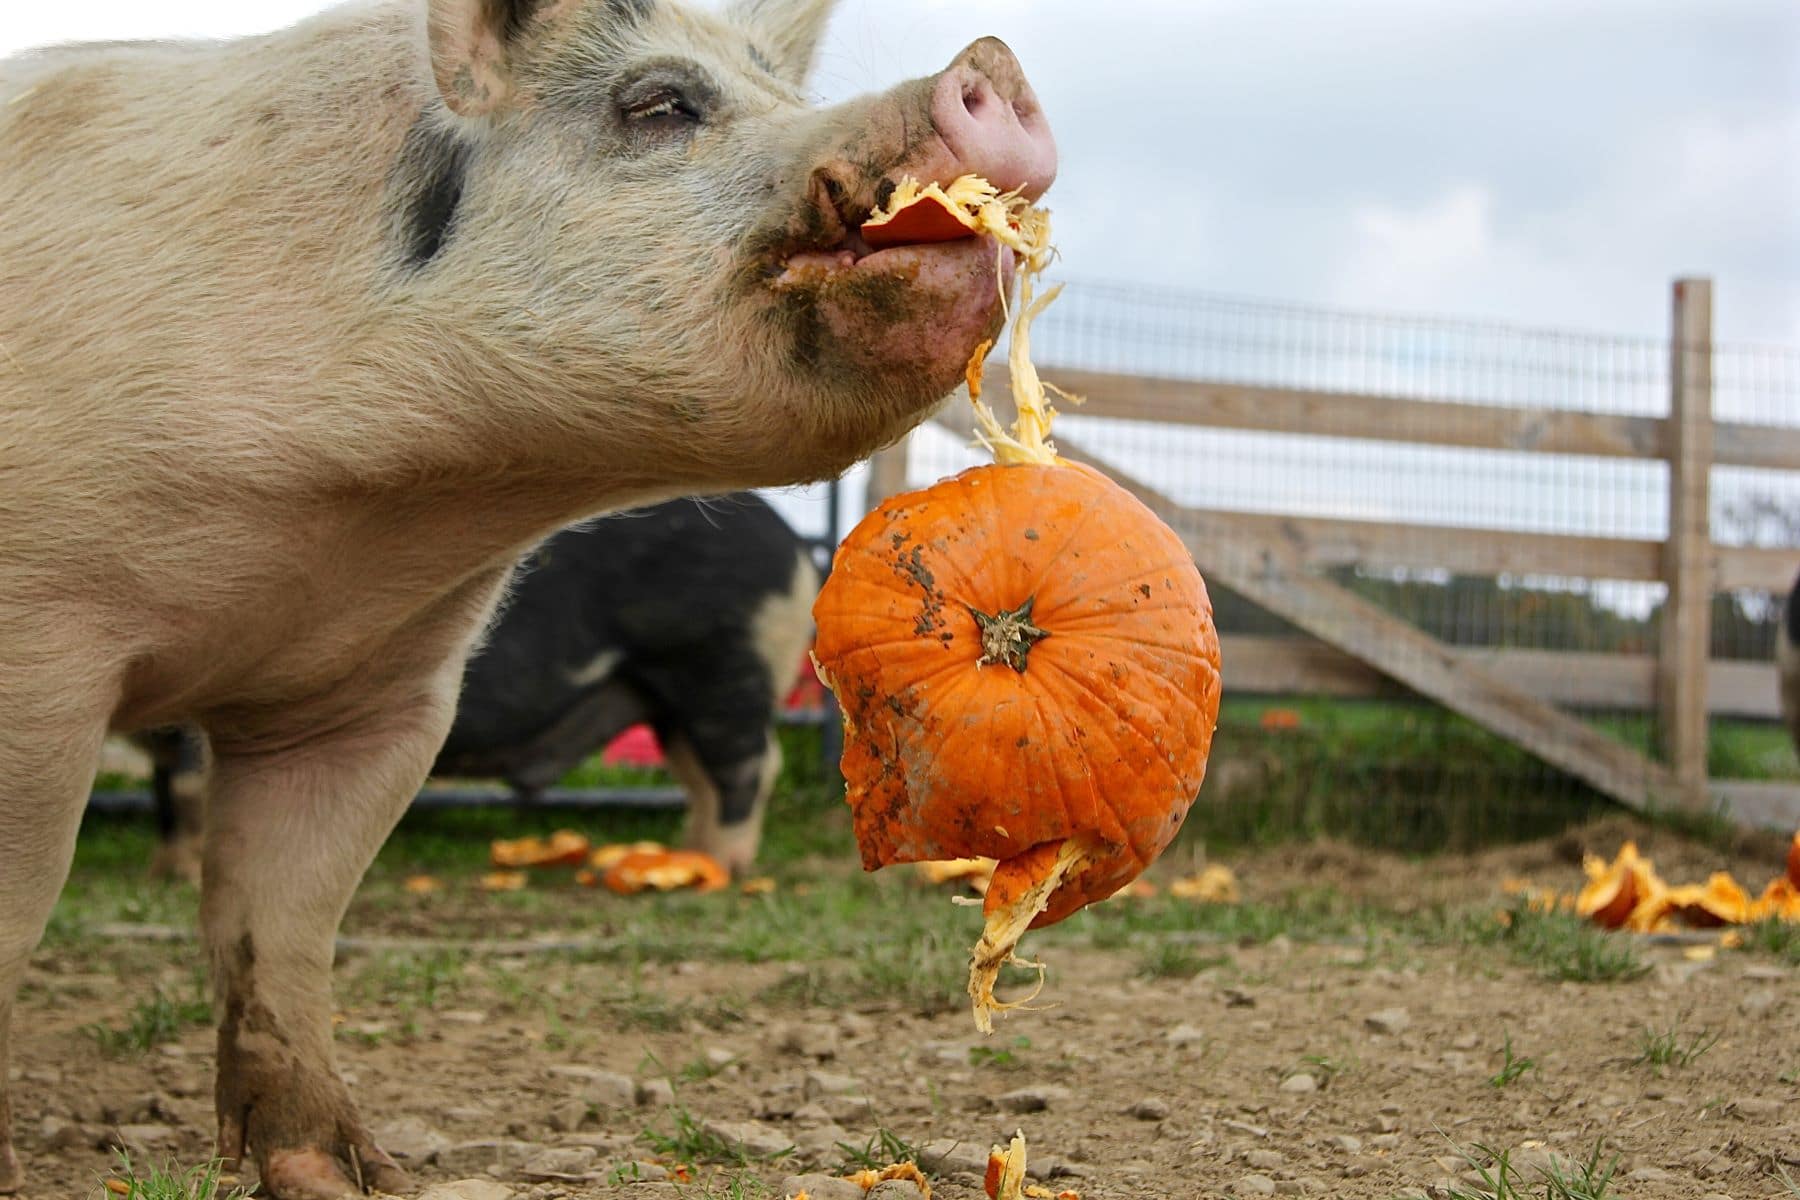 Rescue Pig enjoying eating a pumpkin